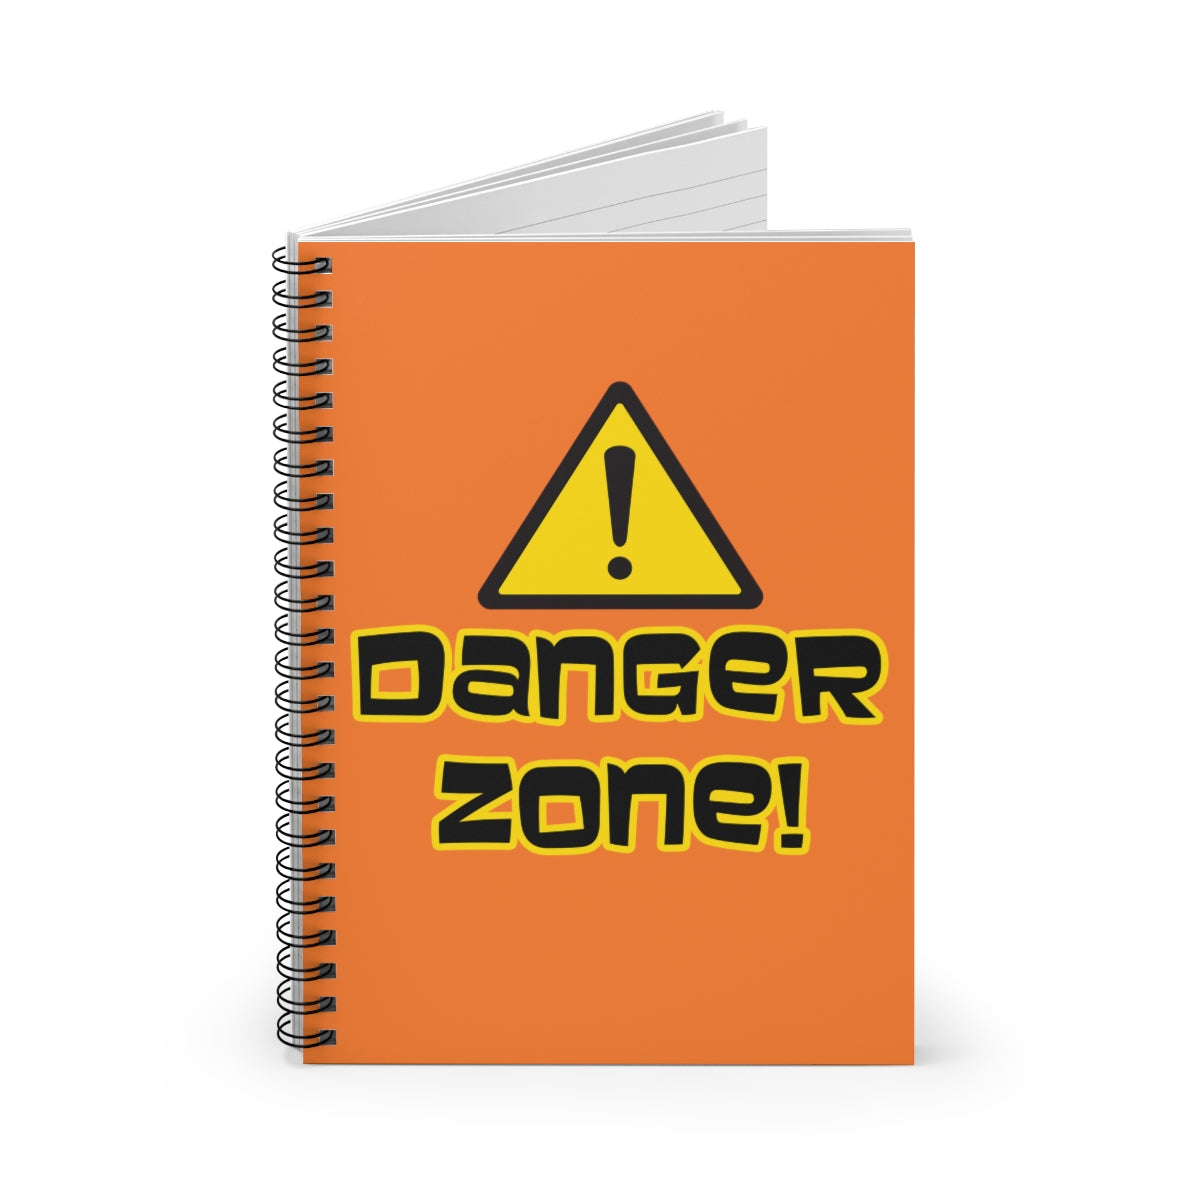 Danger Zone! Archer themed -Spiral Notebook - Ruled LineBrainStorm Tees